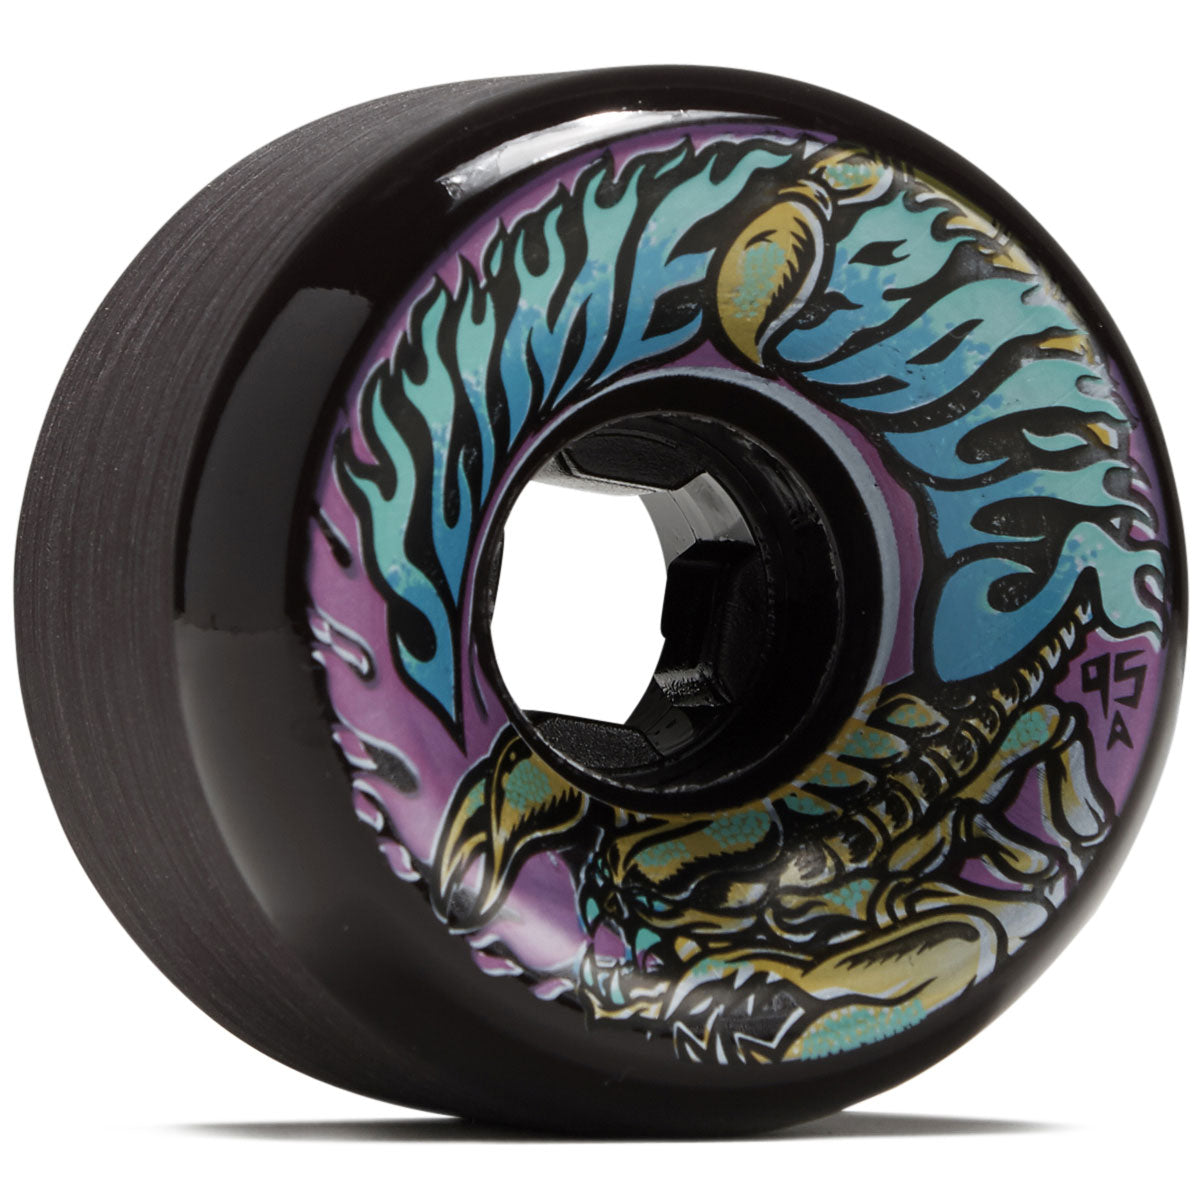 Slime Balls Goooberz Vomits 95a Skateboard Wheels - Black - 60mm image 1